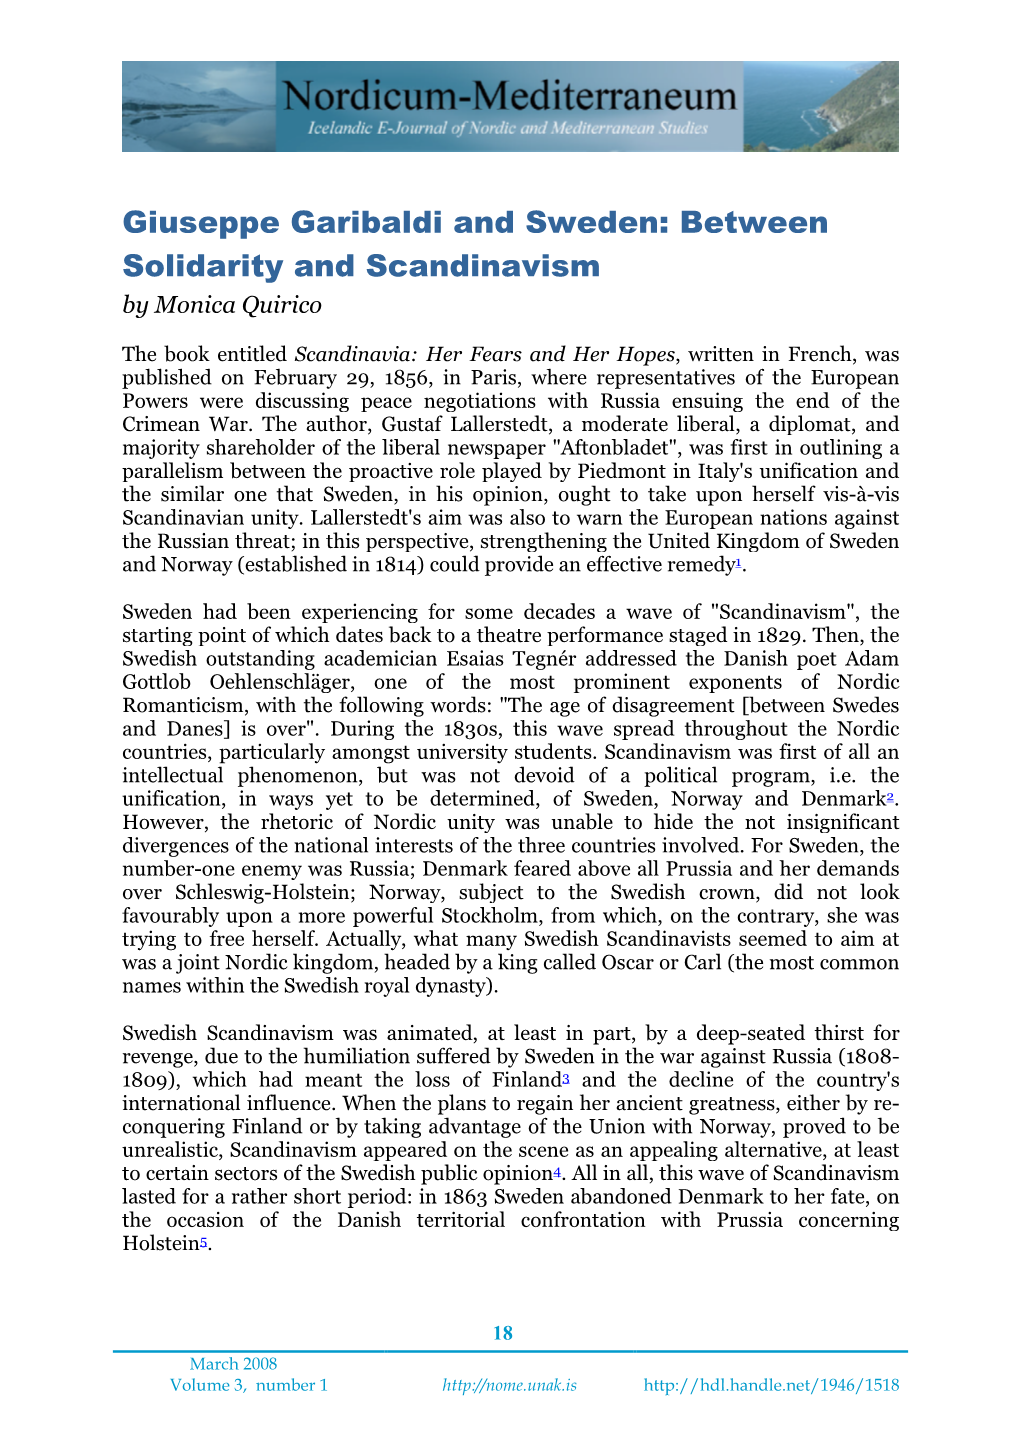 Giuseppe Garibaldi and Sweden: Between Solidarity and Scandinavism by Monica Quirico